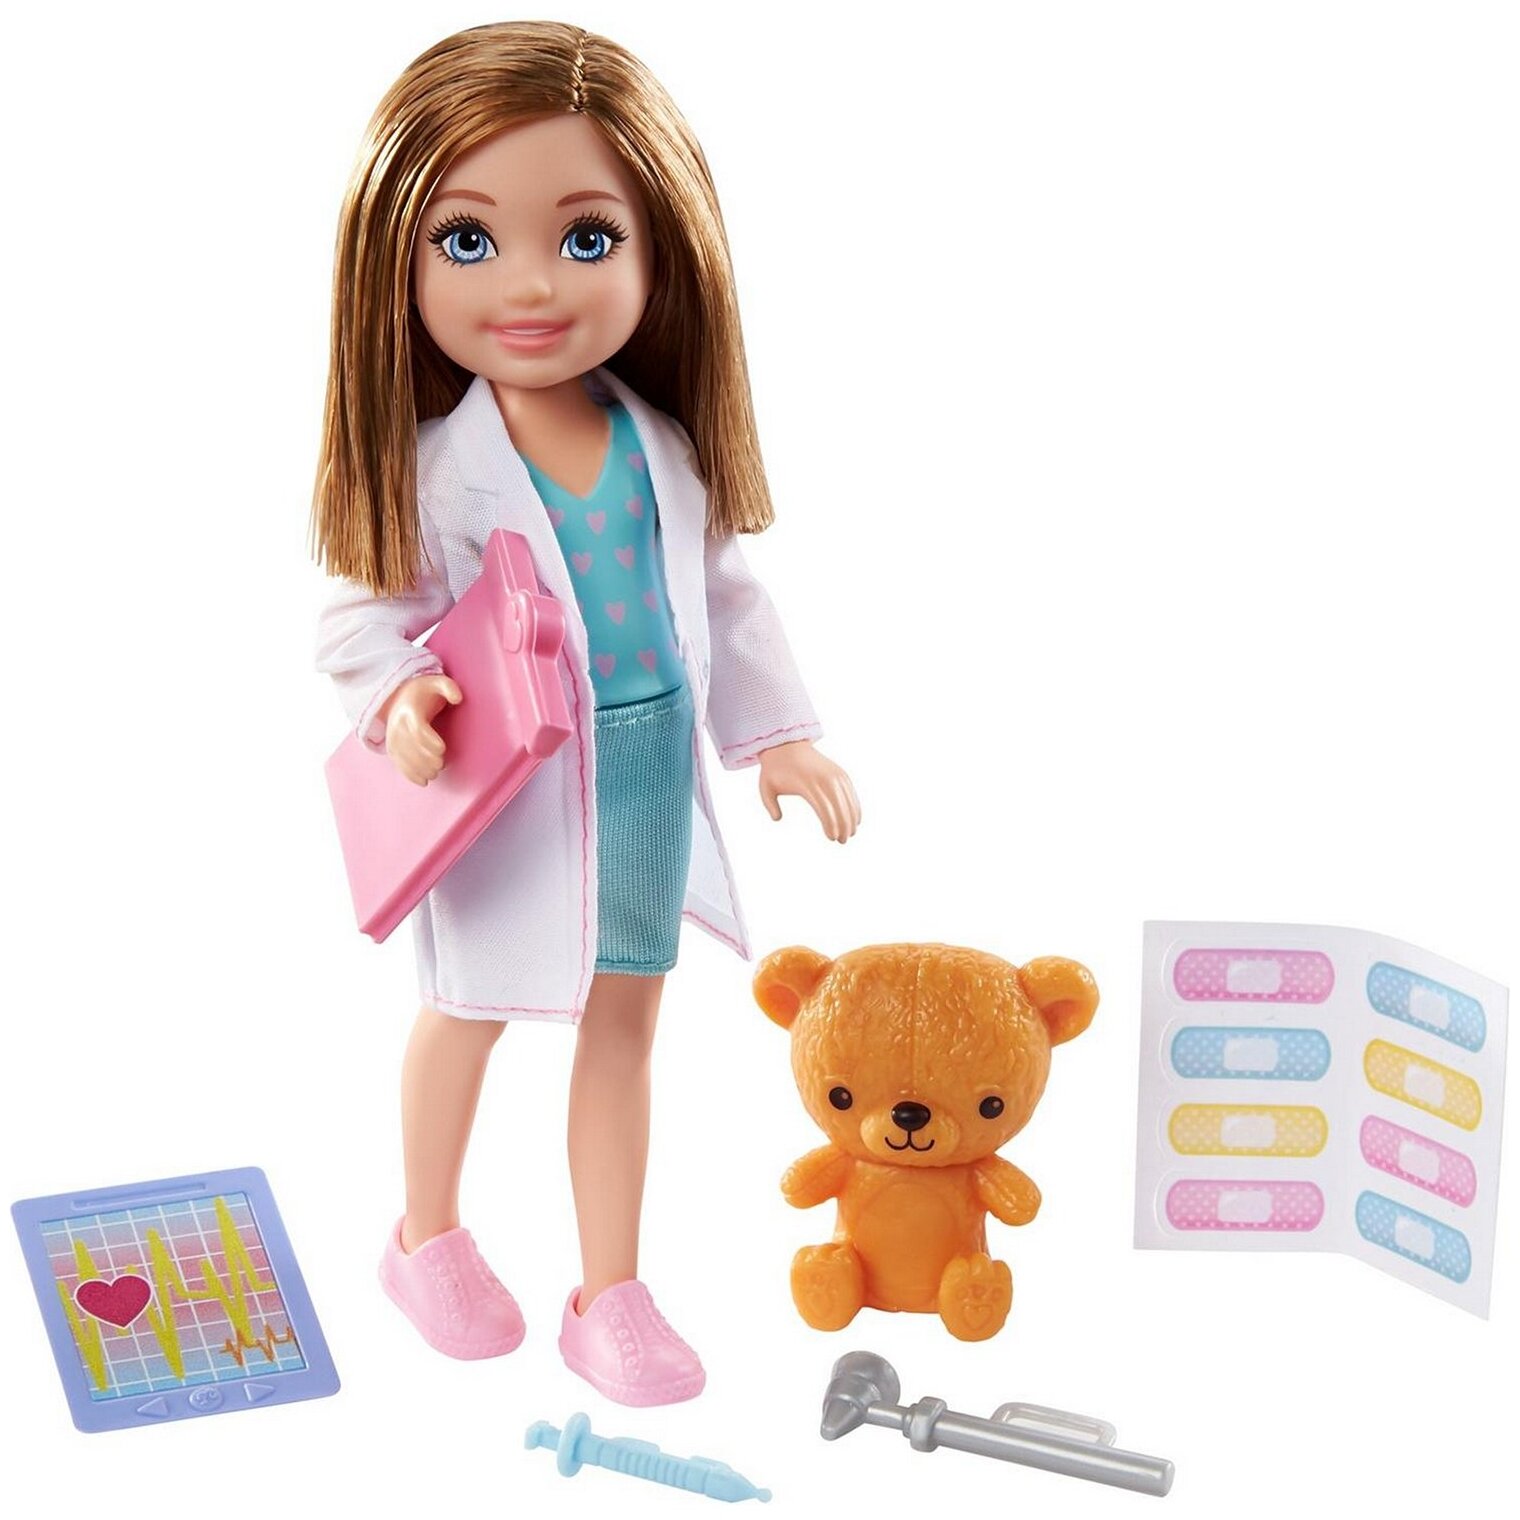 Набор Barbie Карьера Челси кукла+аксессуары Доктор GTN88